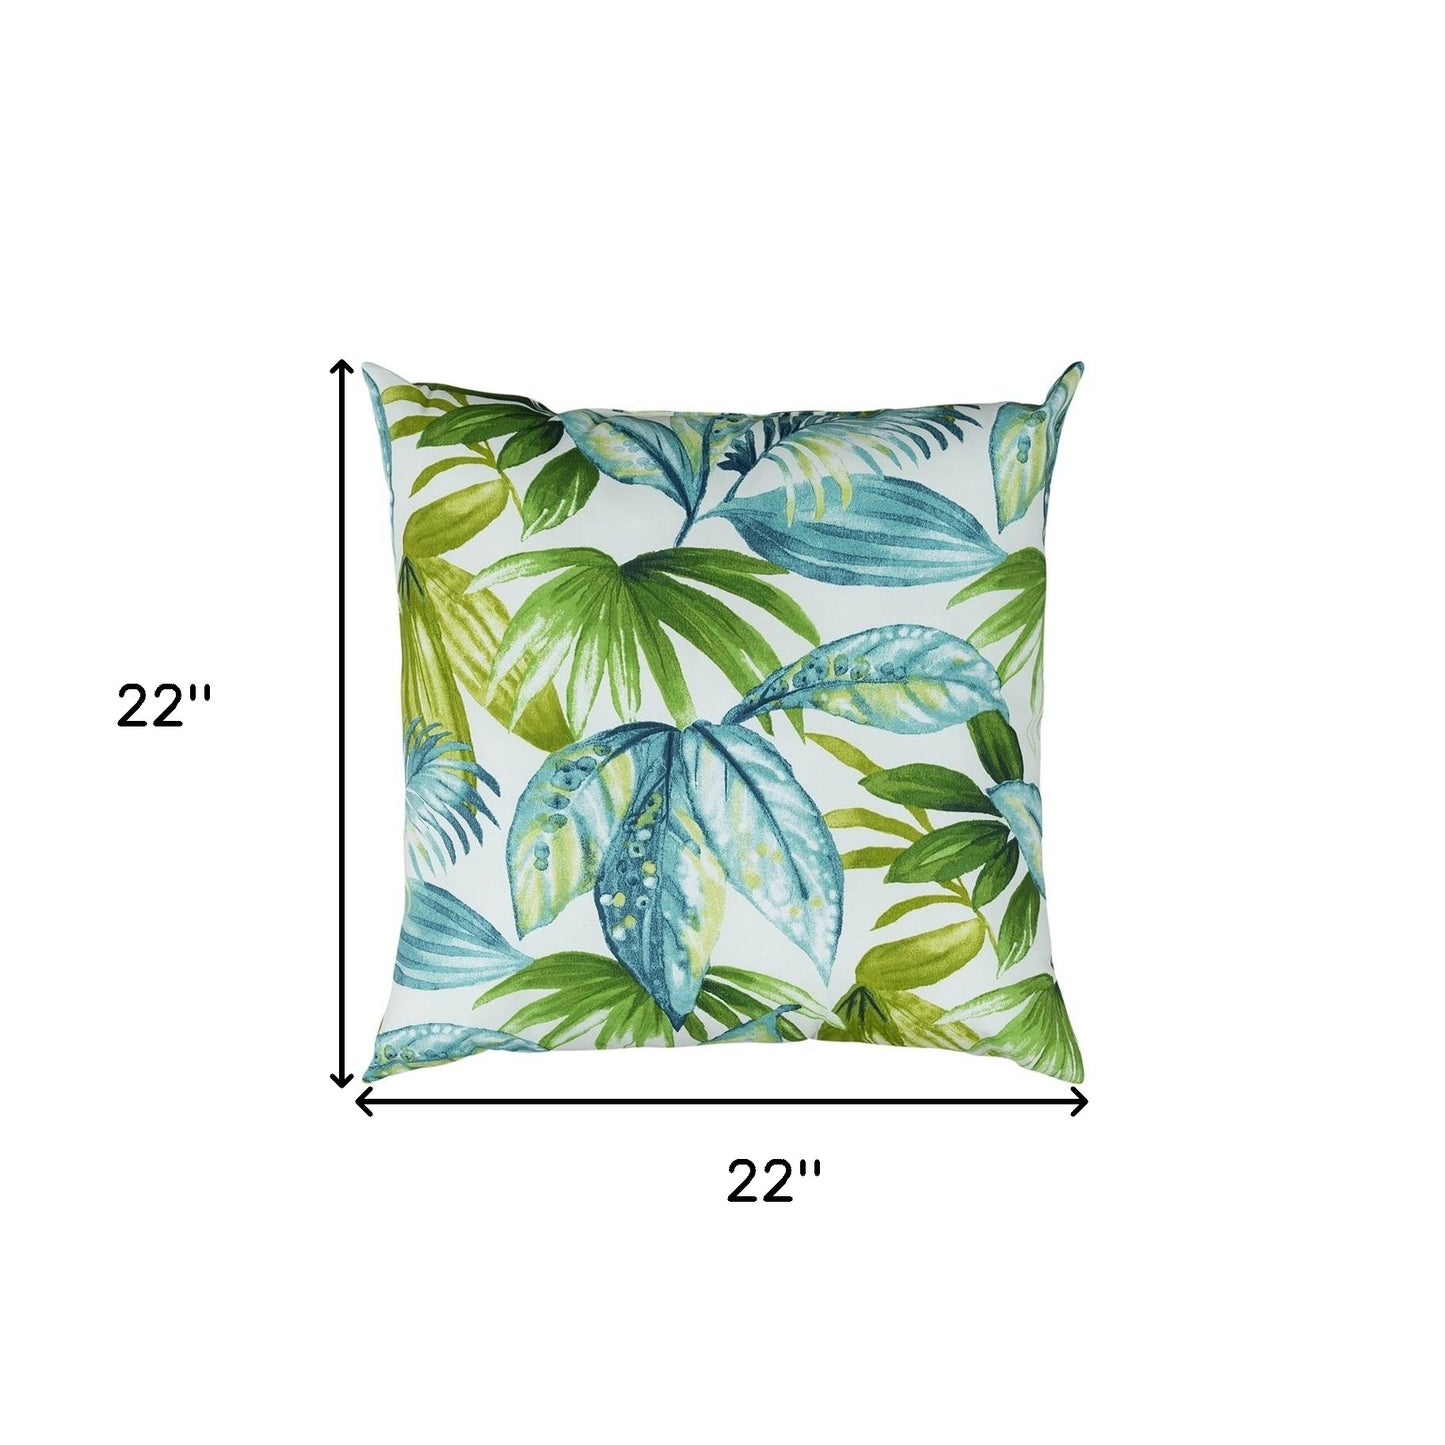 Blue Green Tropical Foliage Indoor Outdoor Throw Pillow